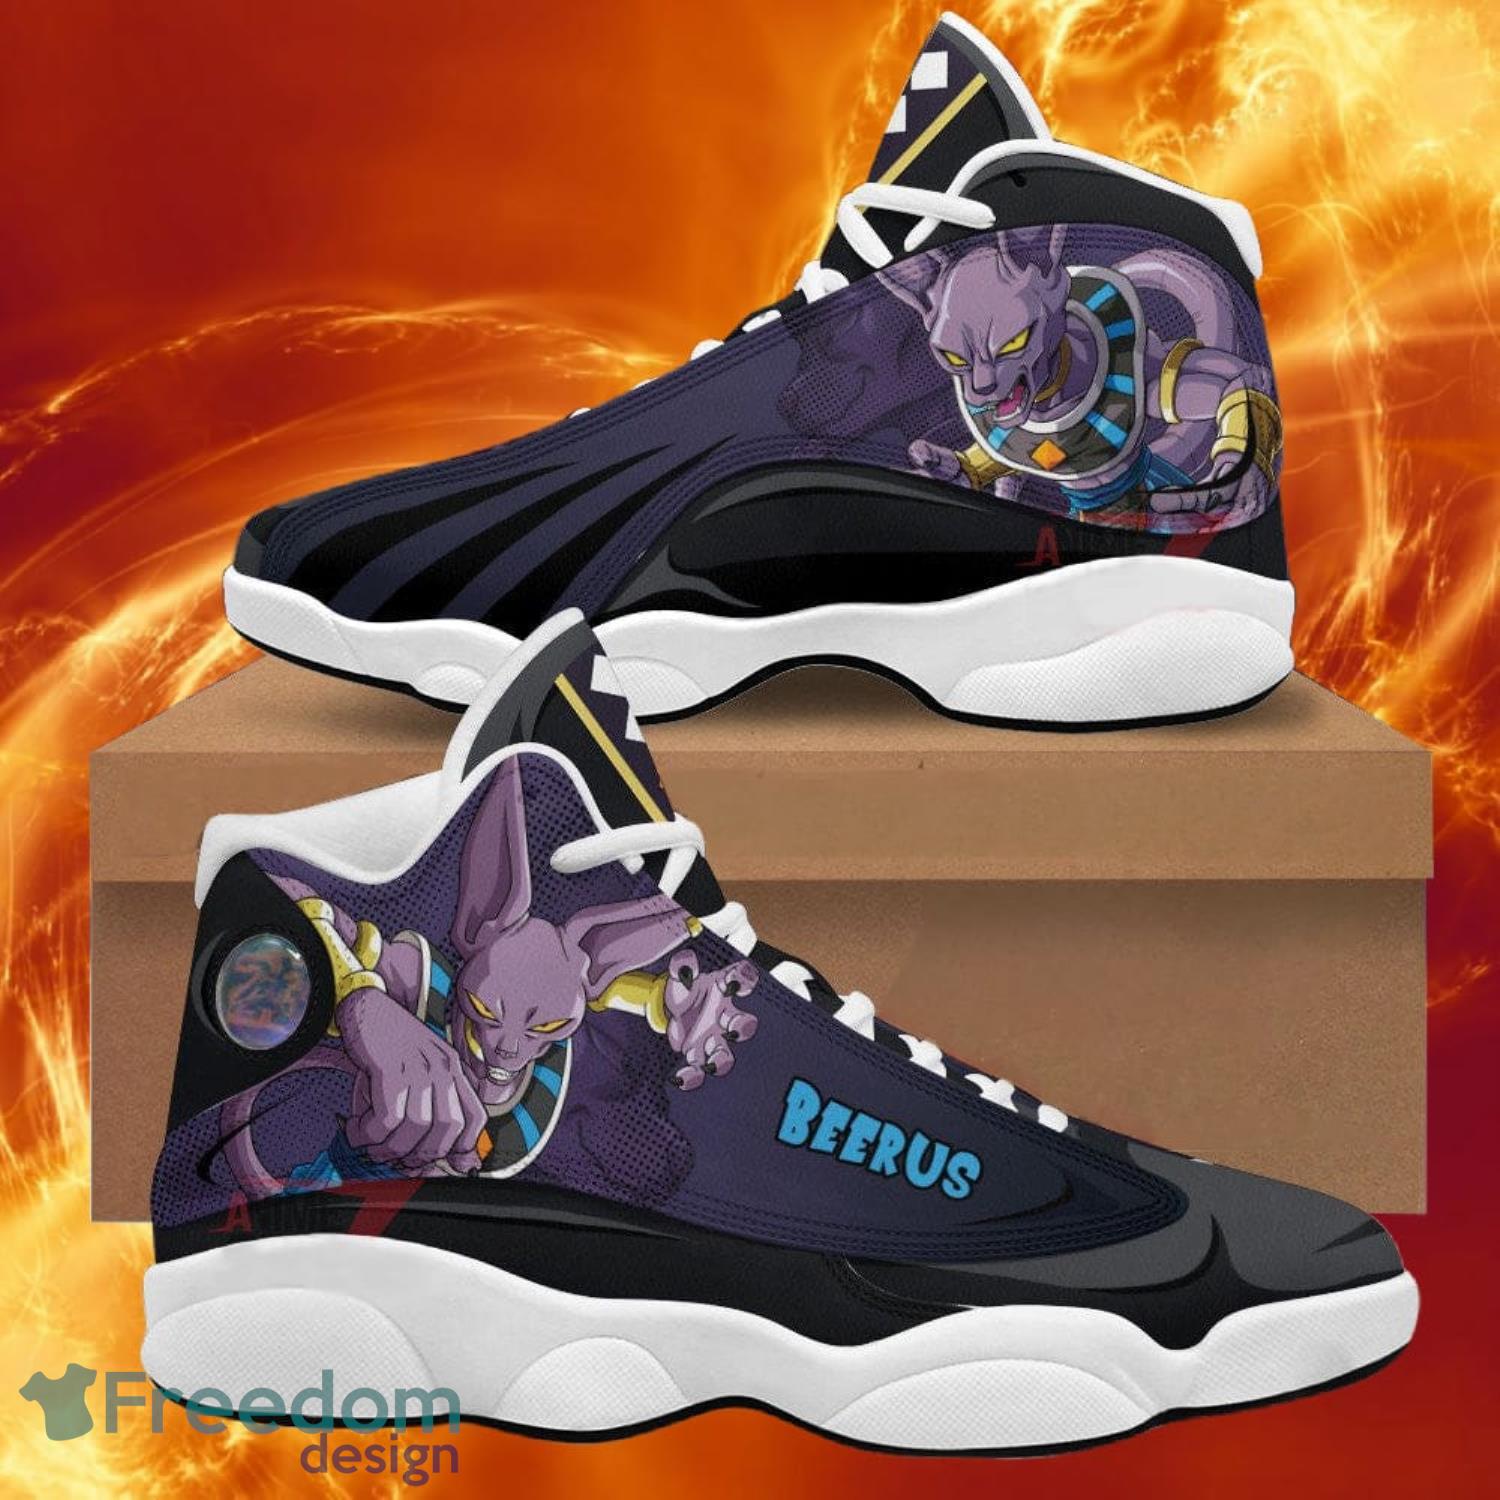 Frieza Black Jordan 1 Sneaker Boots, Limited Edition Dragon Ball